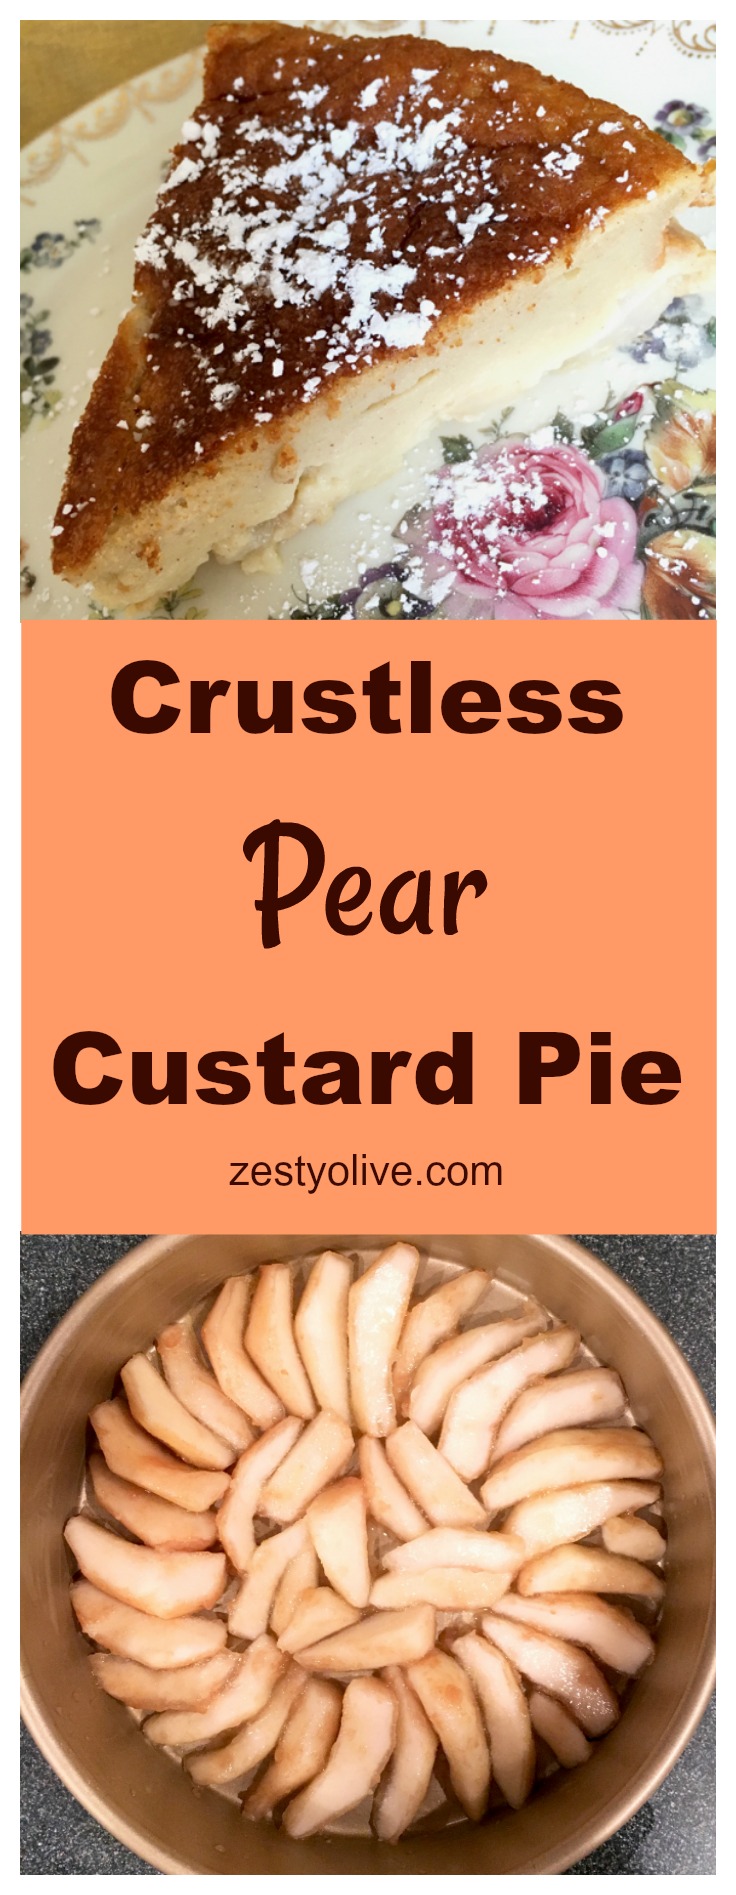 Crustless Pear Custard Pie